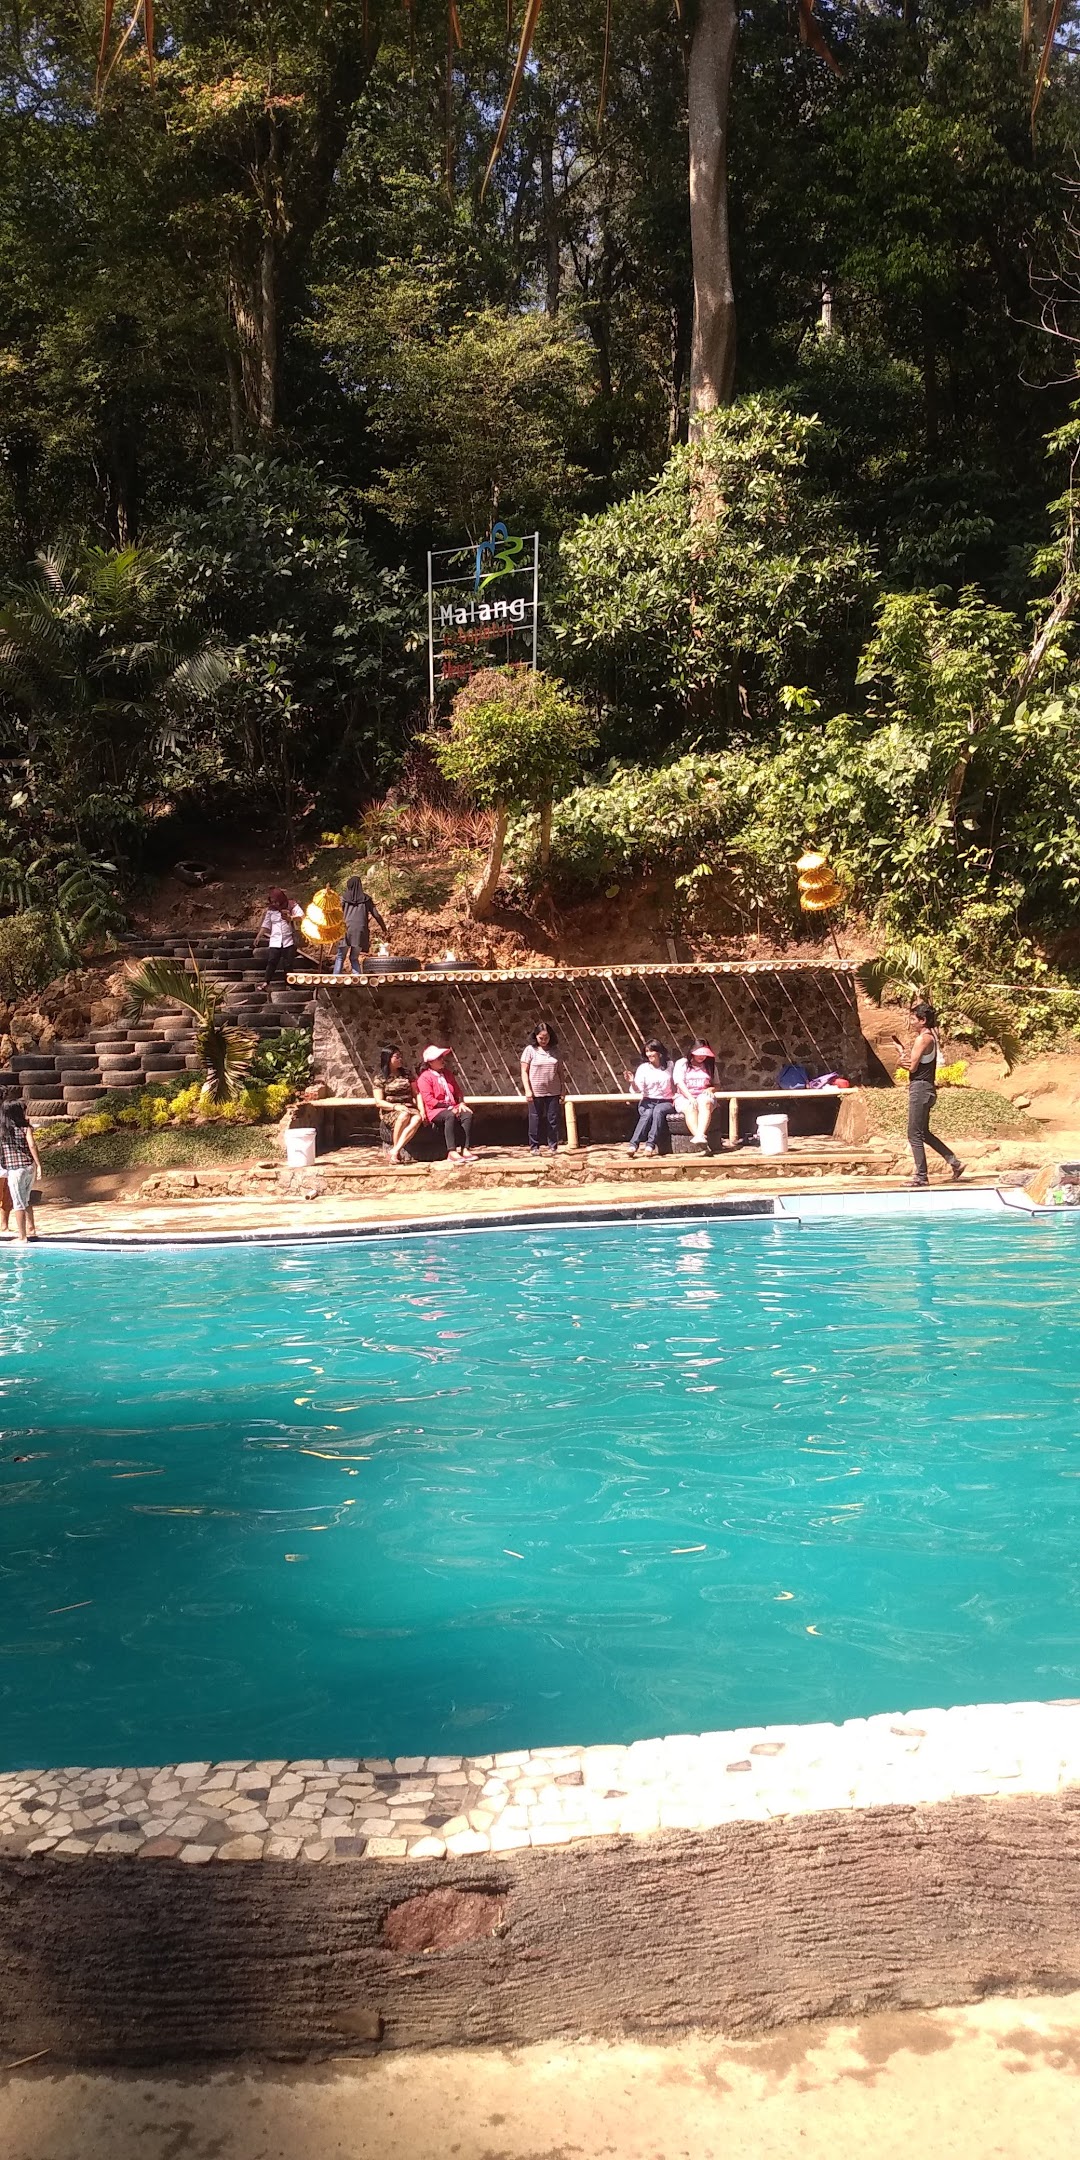 Wisata pemandian kolam renang kucur park